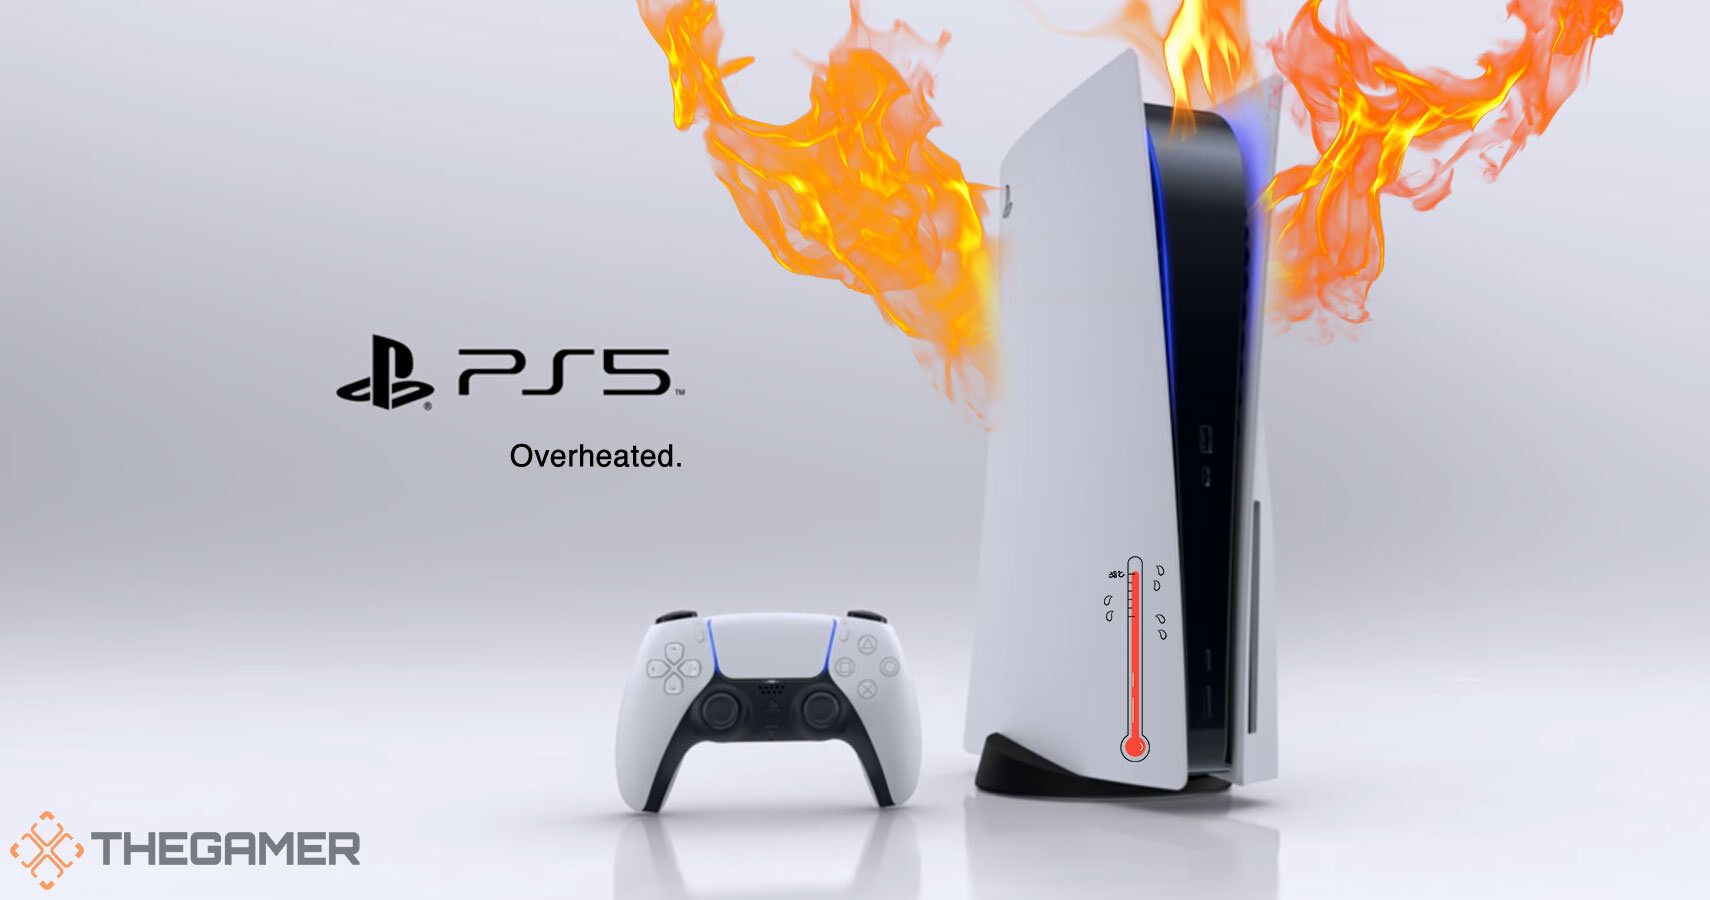 Display PS5 Overheated